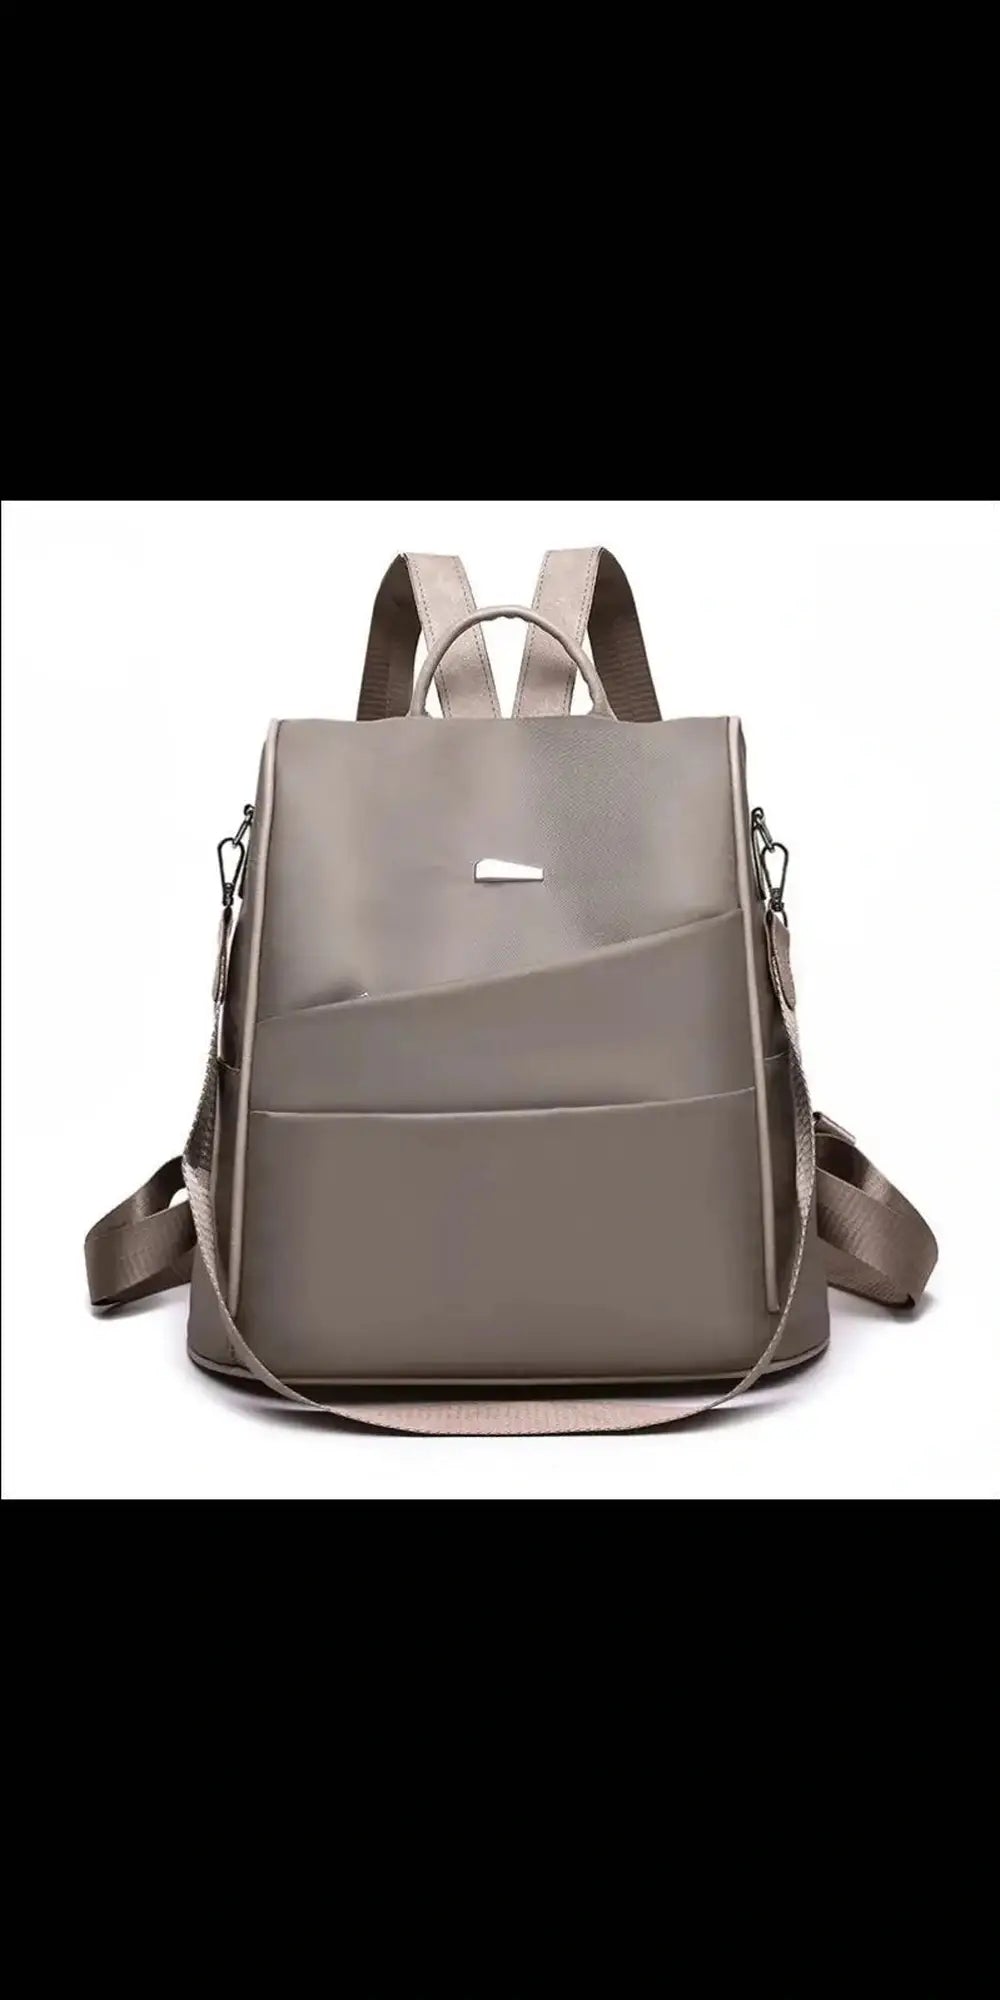 Backpack fashion small backpack - Khaki - bags